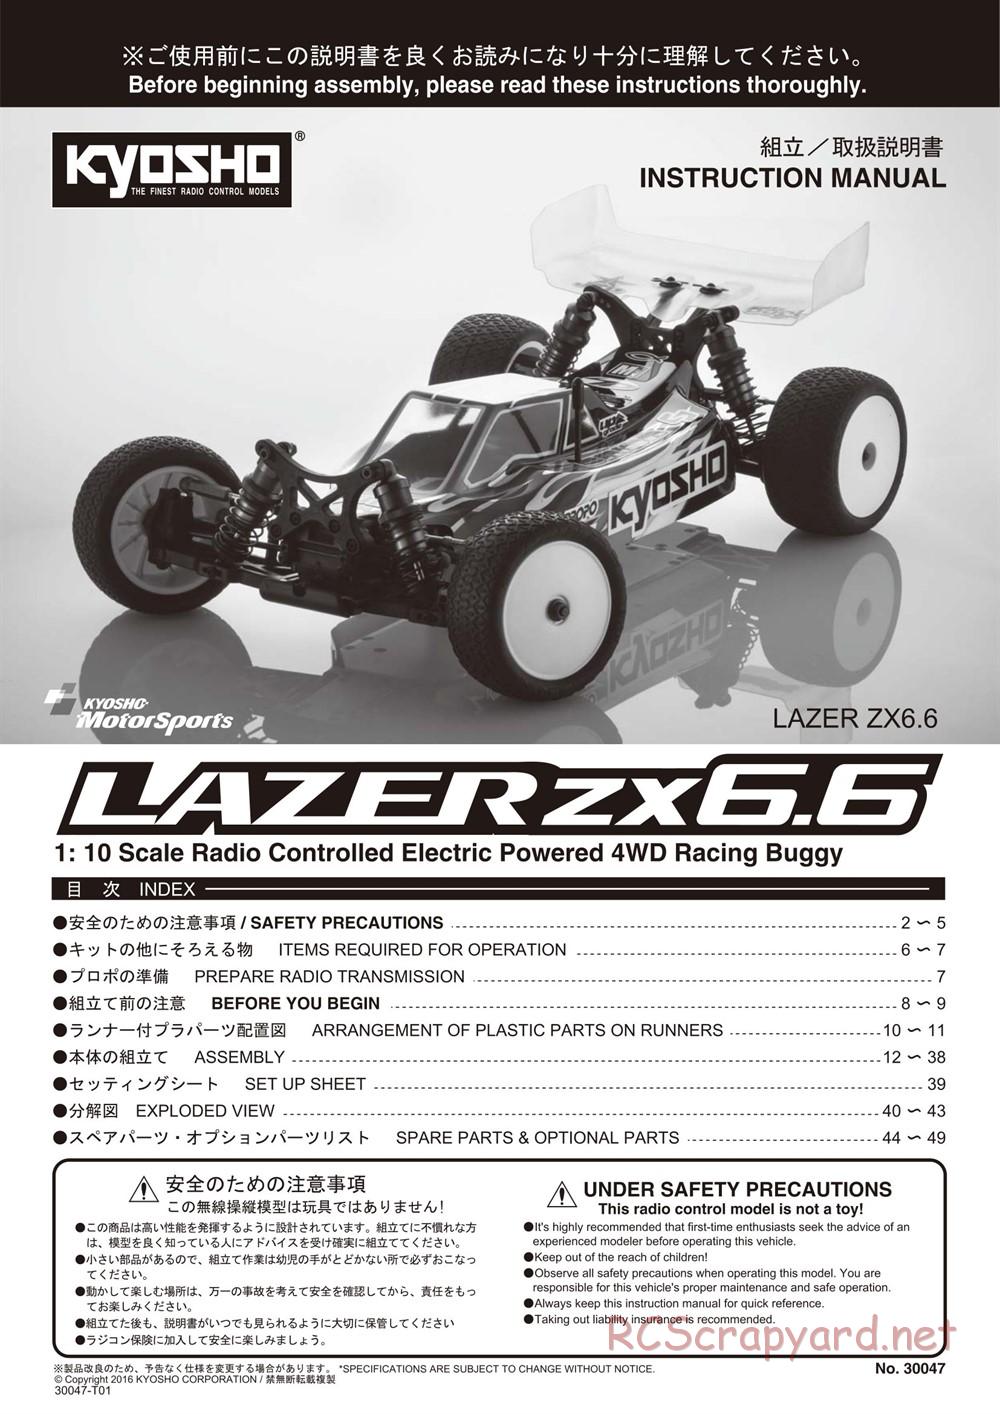 Kyosho - Lazer ZX6.6 - Manual - Page 1